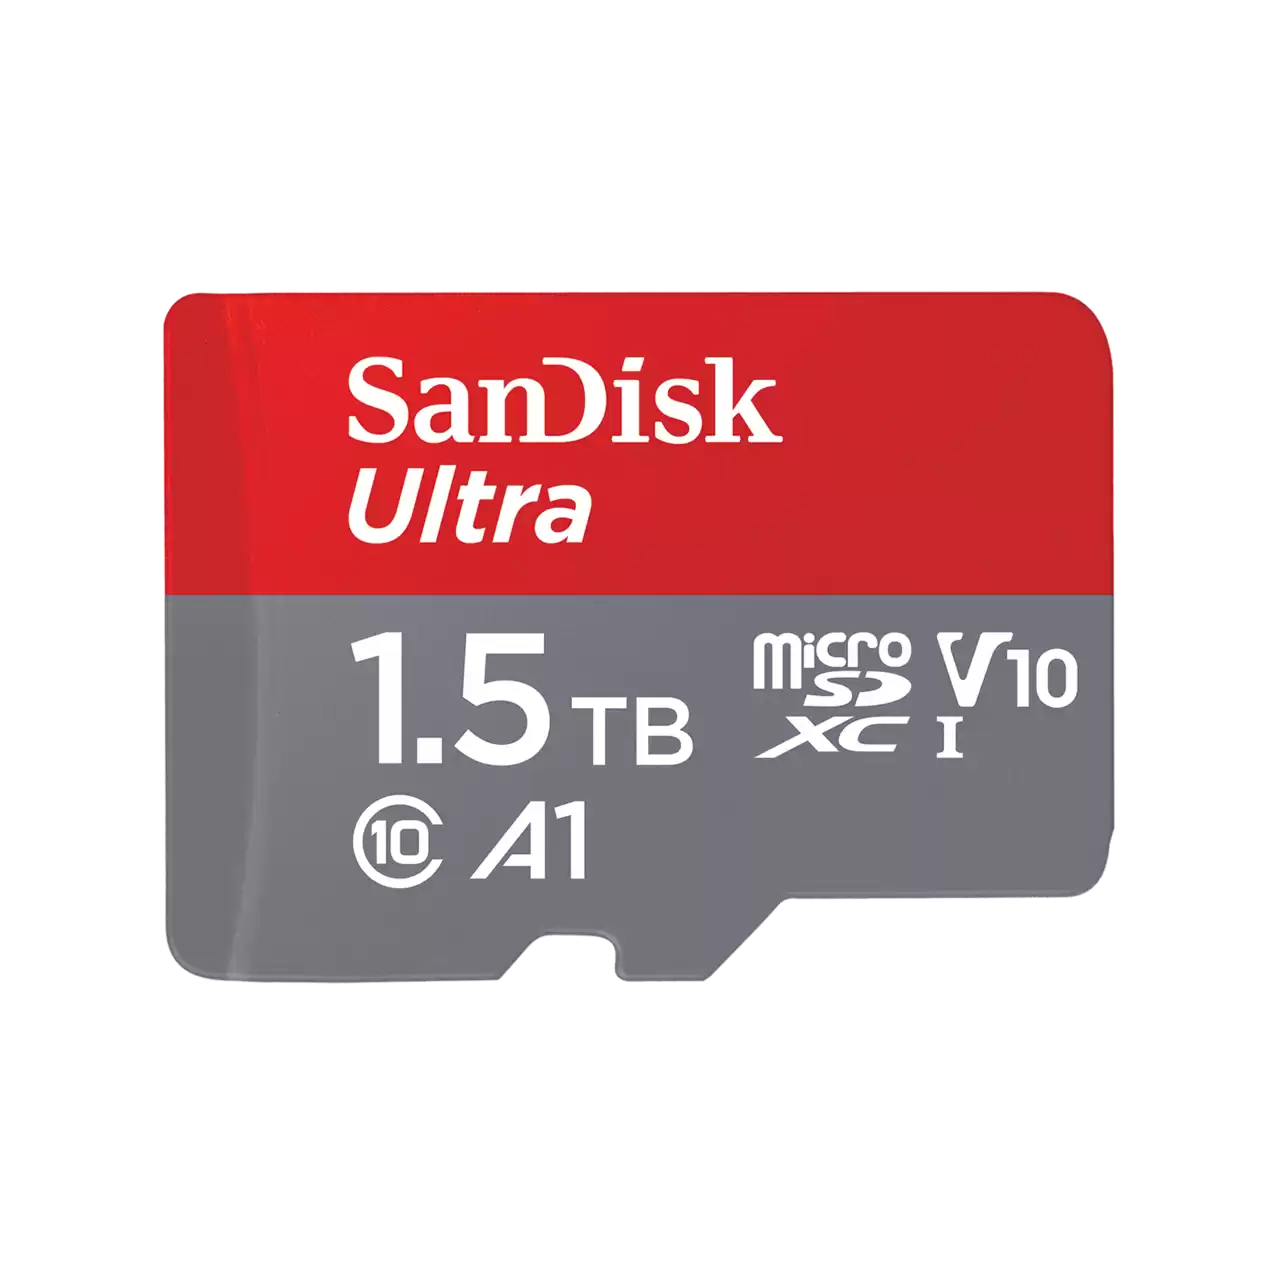 SanDisk Ultra microSD 記憶卡 - 1.5TB (150MB/s)